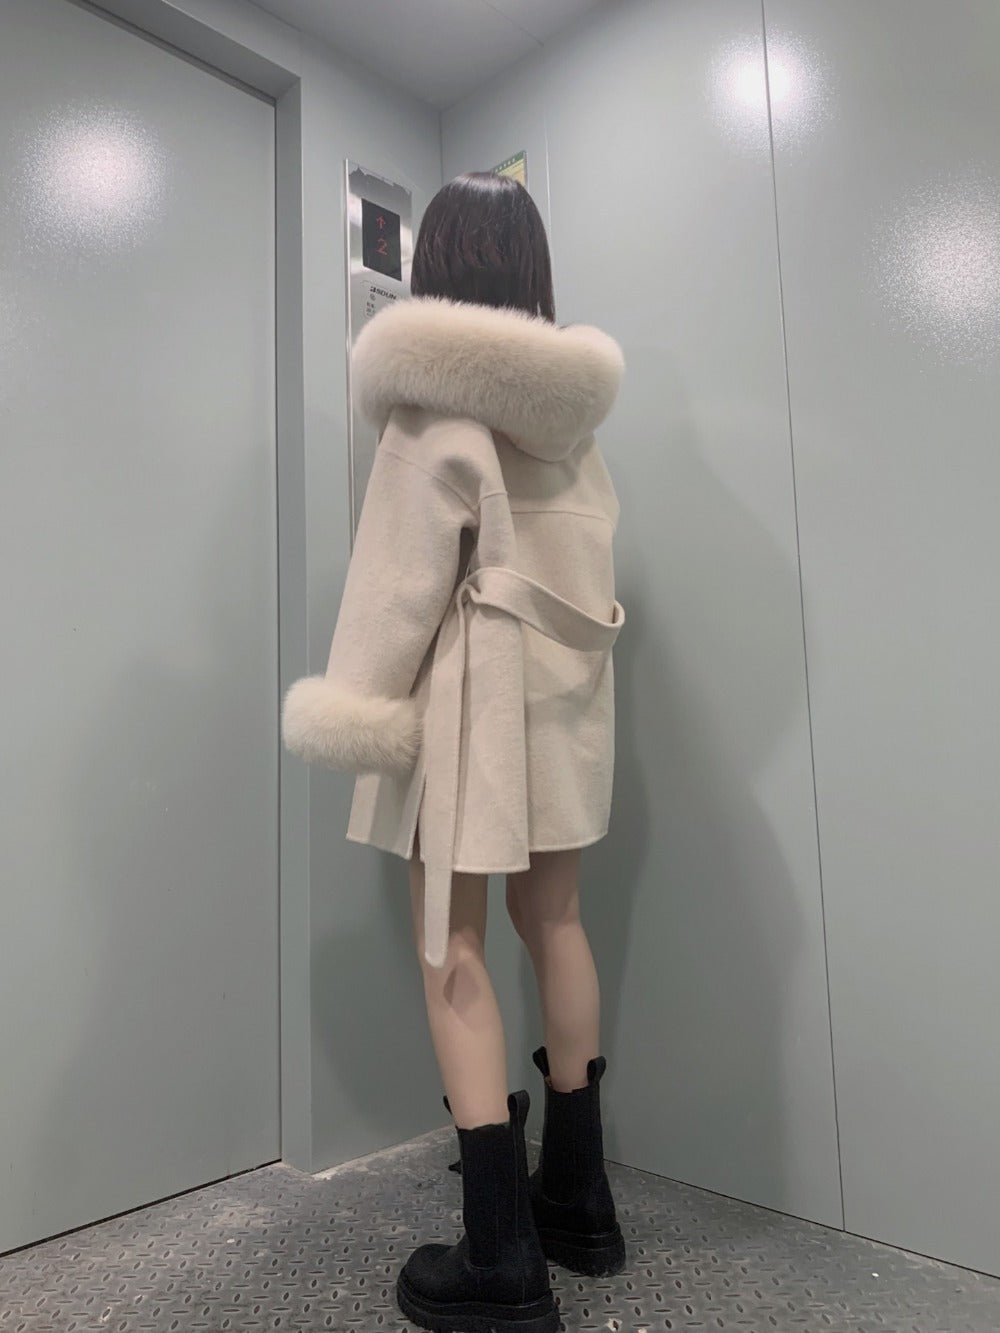 Lizakosht Luxury Oversized Real Cashmere Blend Coat Women Winter Wool Hooded Cardigan Jacket With Genuine Fox Fur Collar